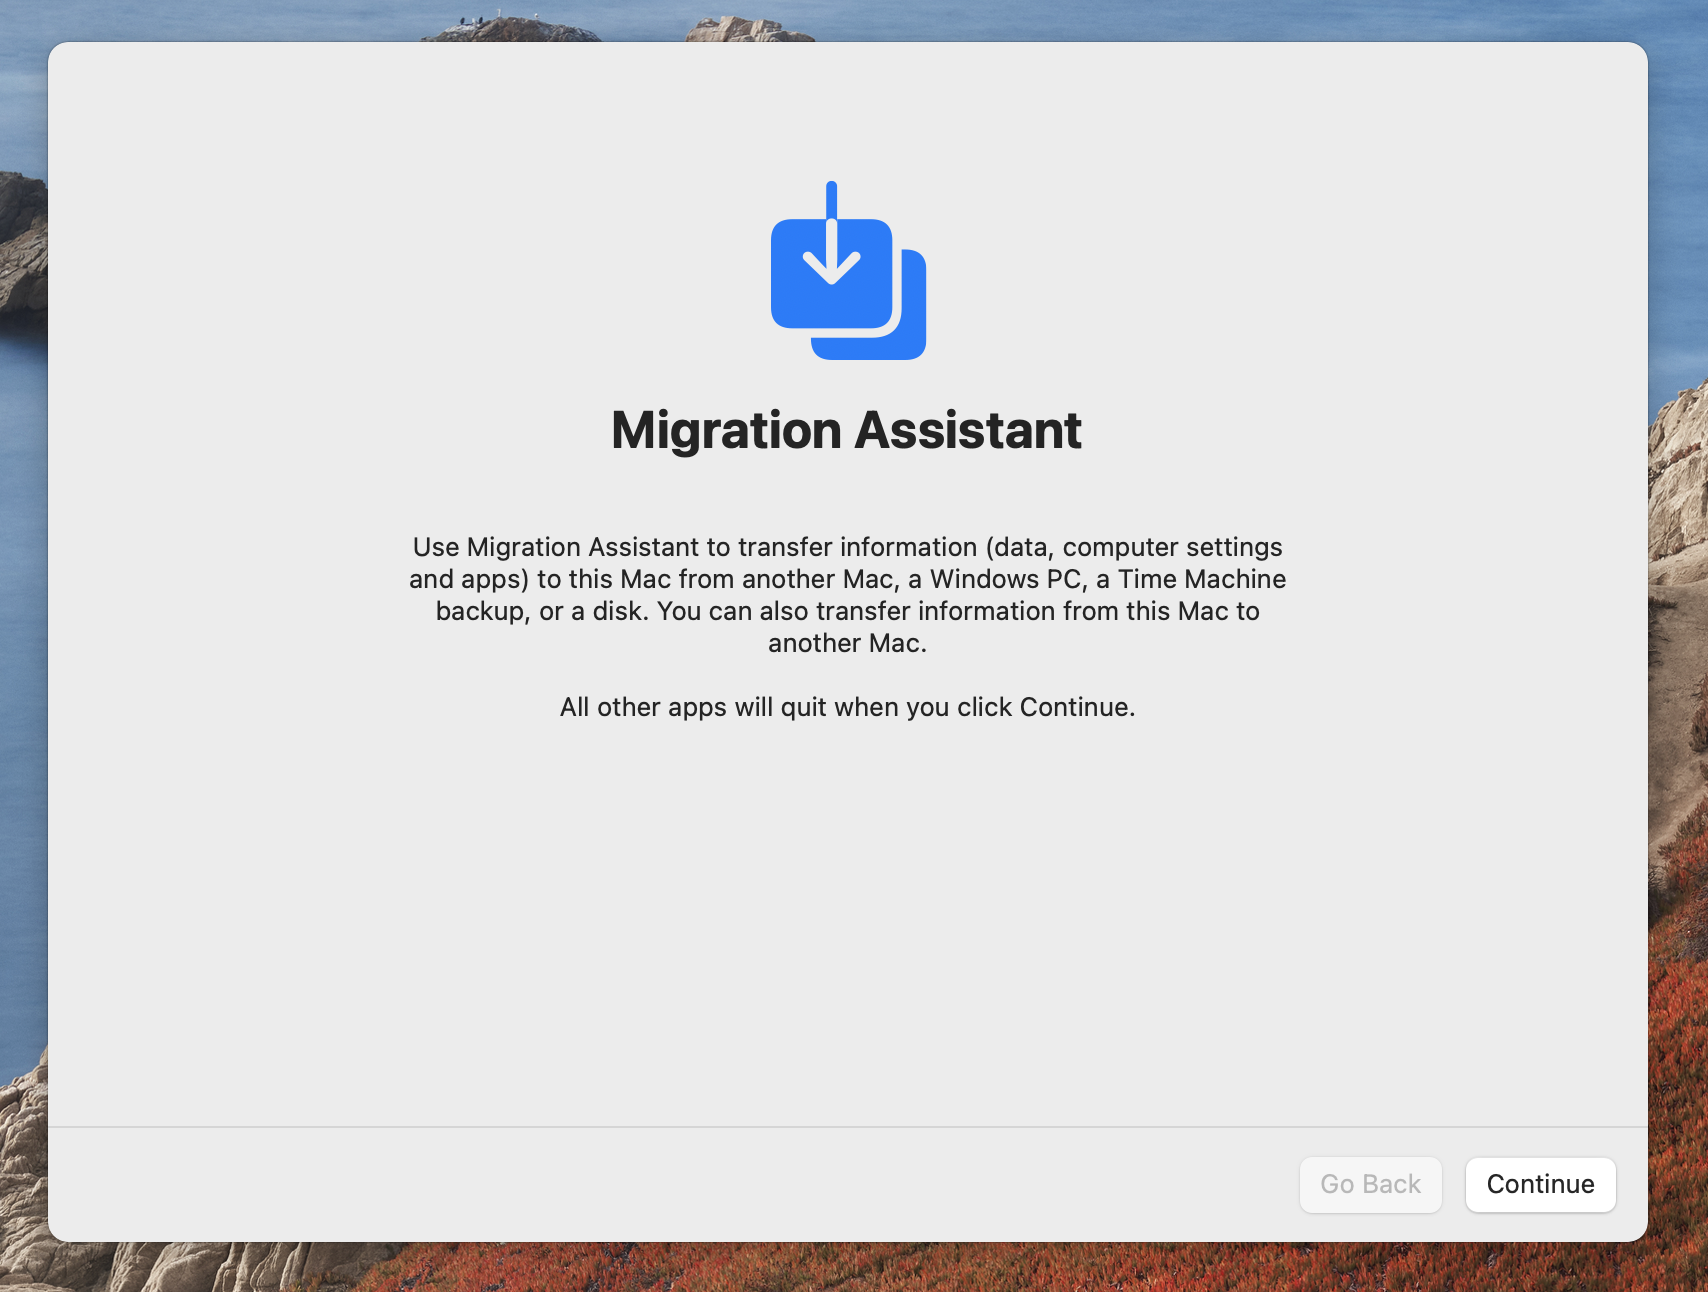 migration assistant pc to mac via ethernet cable